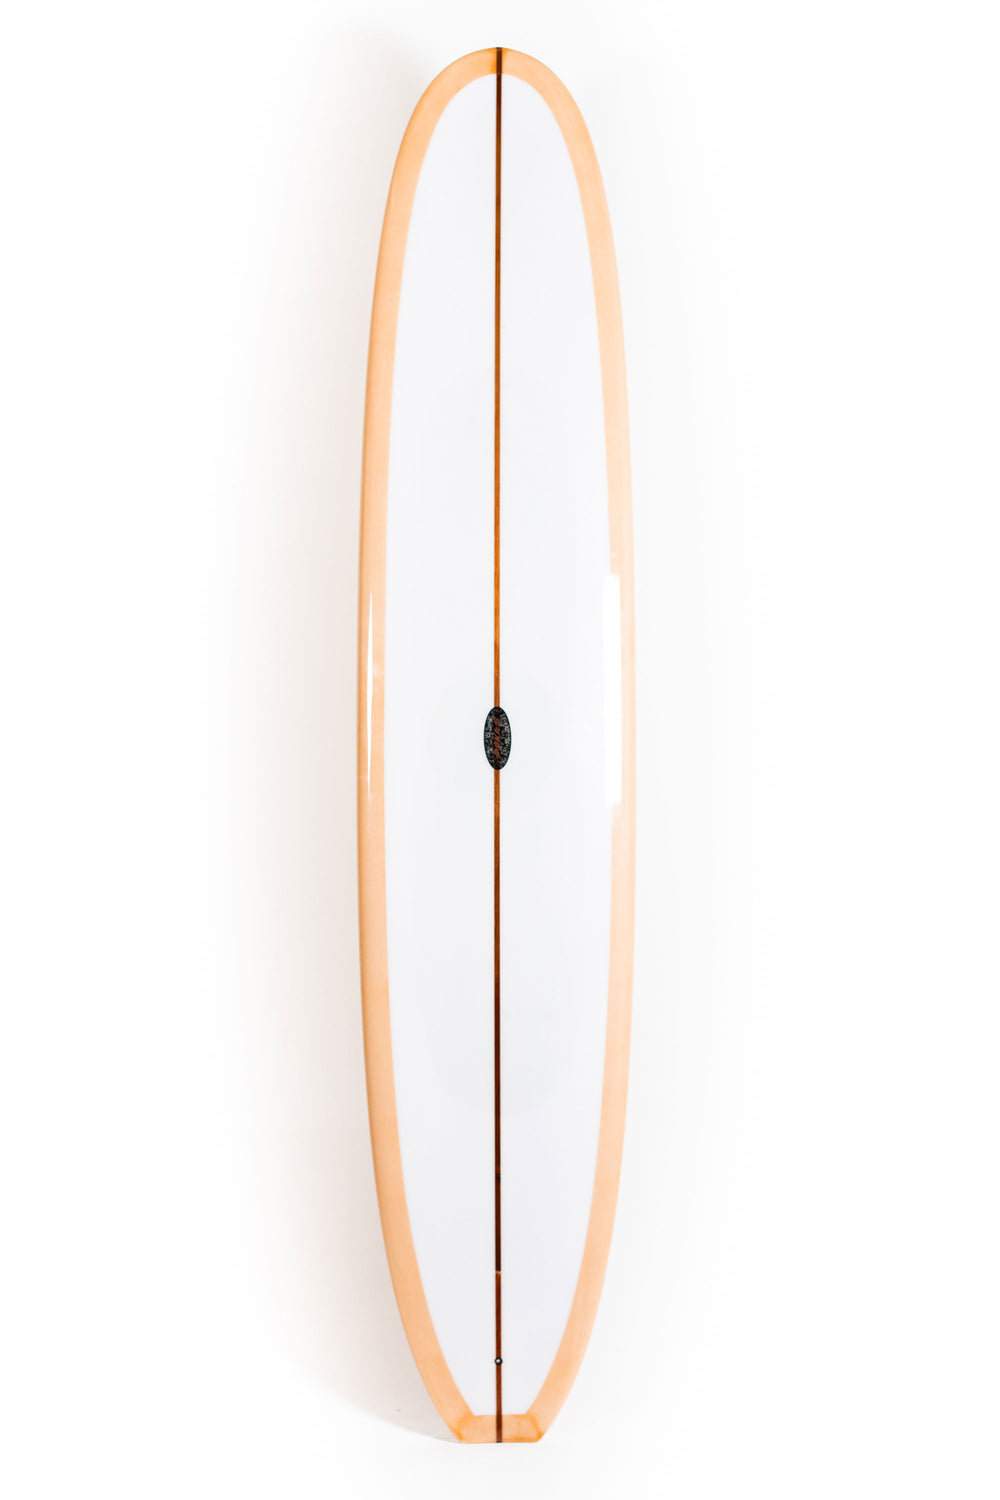 Pukas Surf Shop - Pukas Surfboards - MAYFLOWER by Axel Lorentz -  9'6